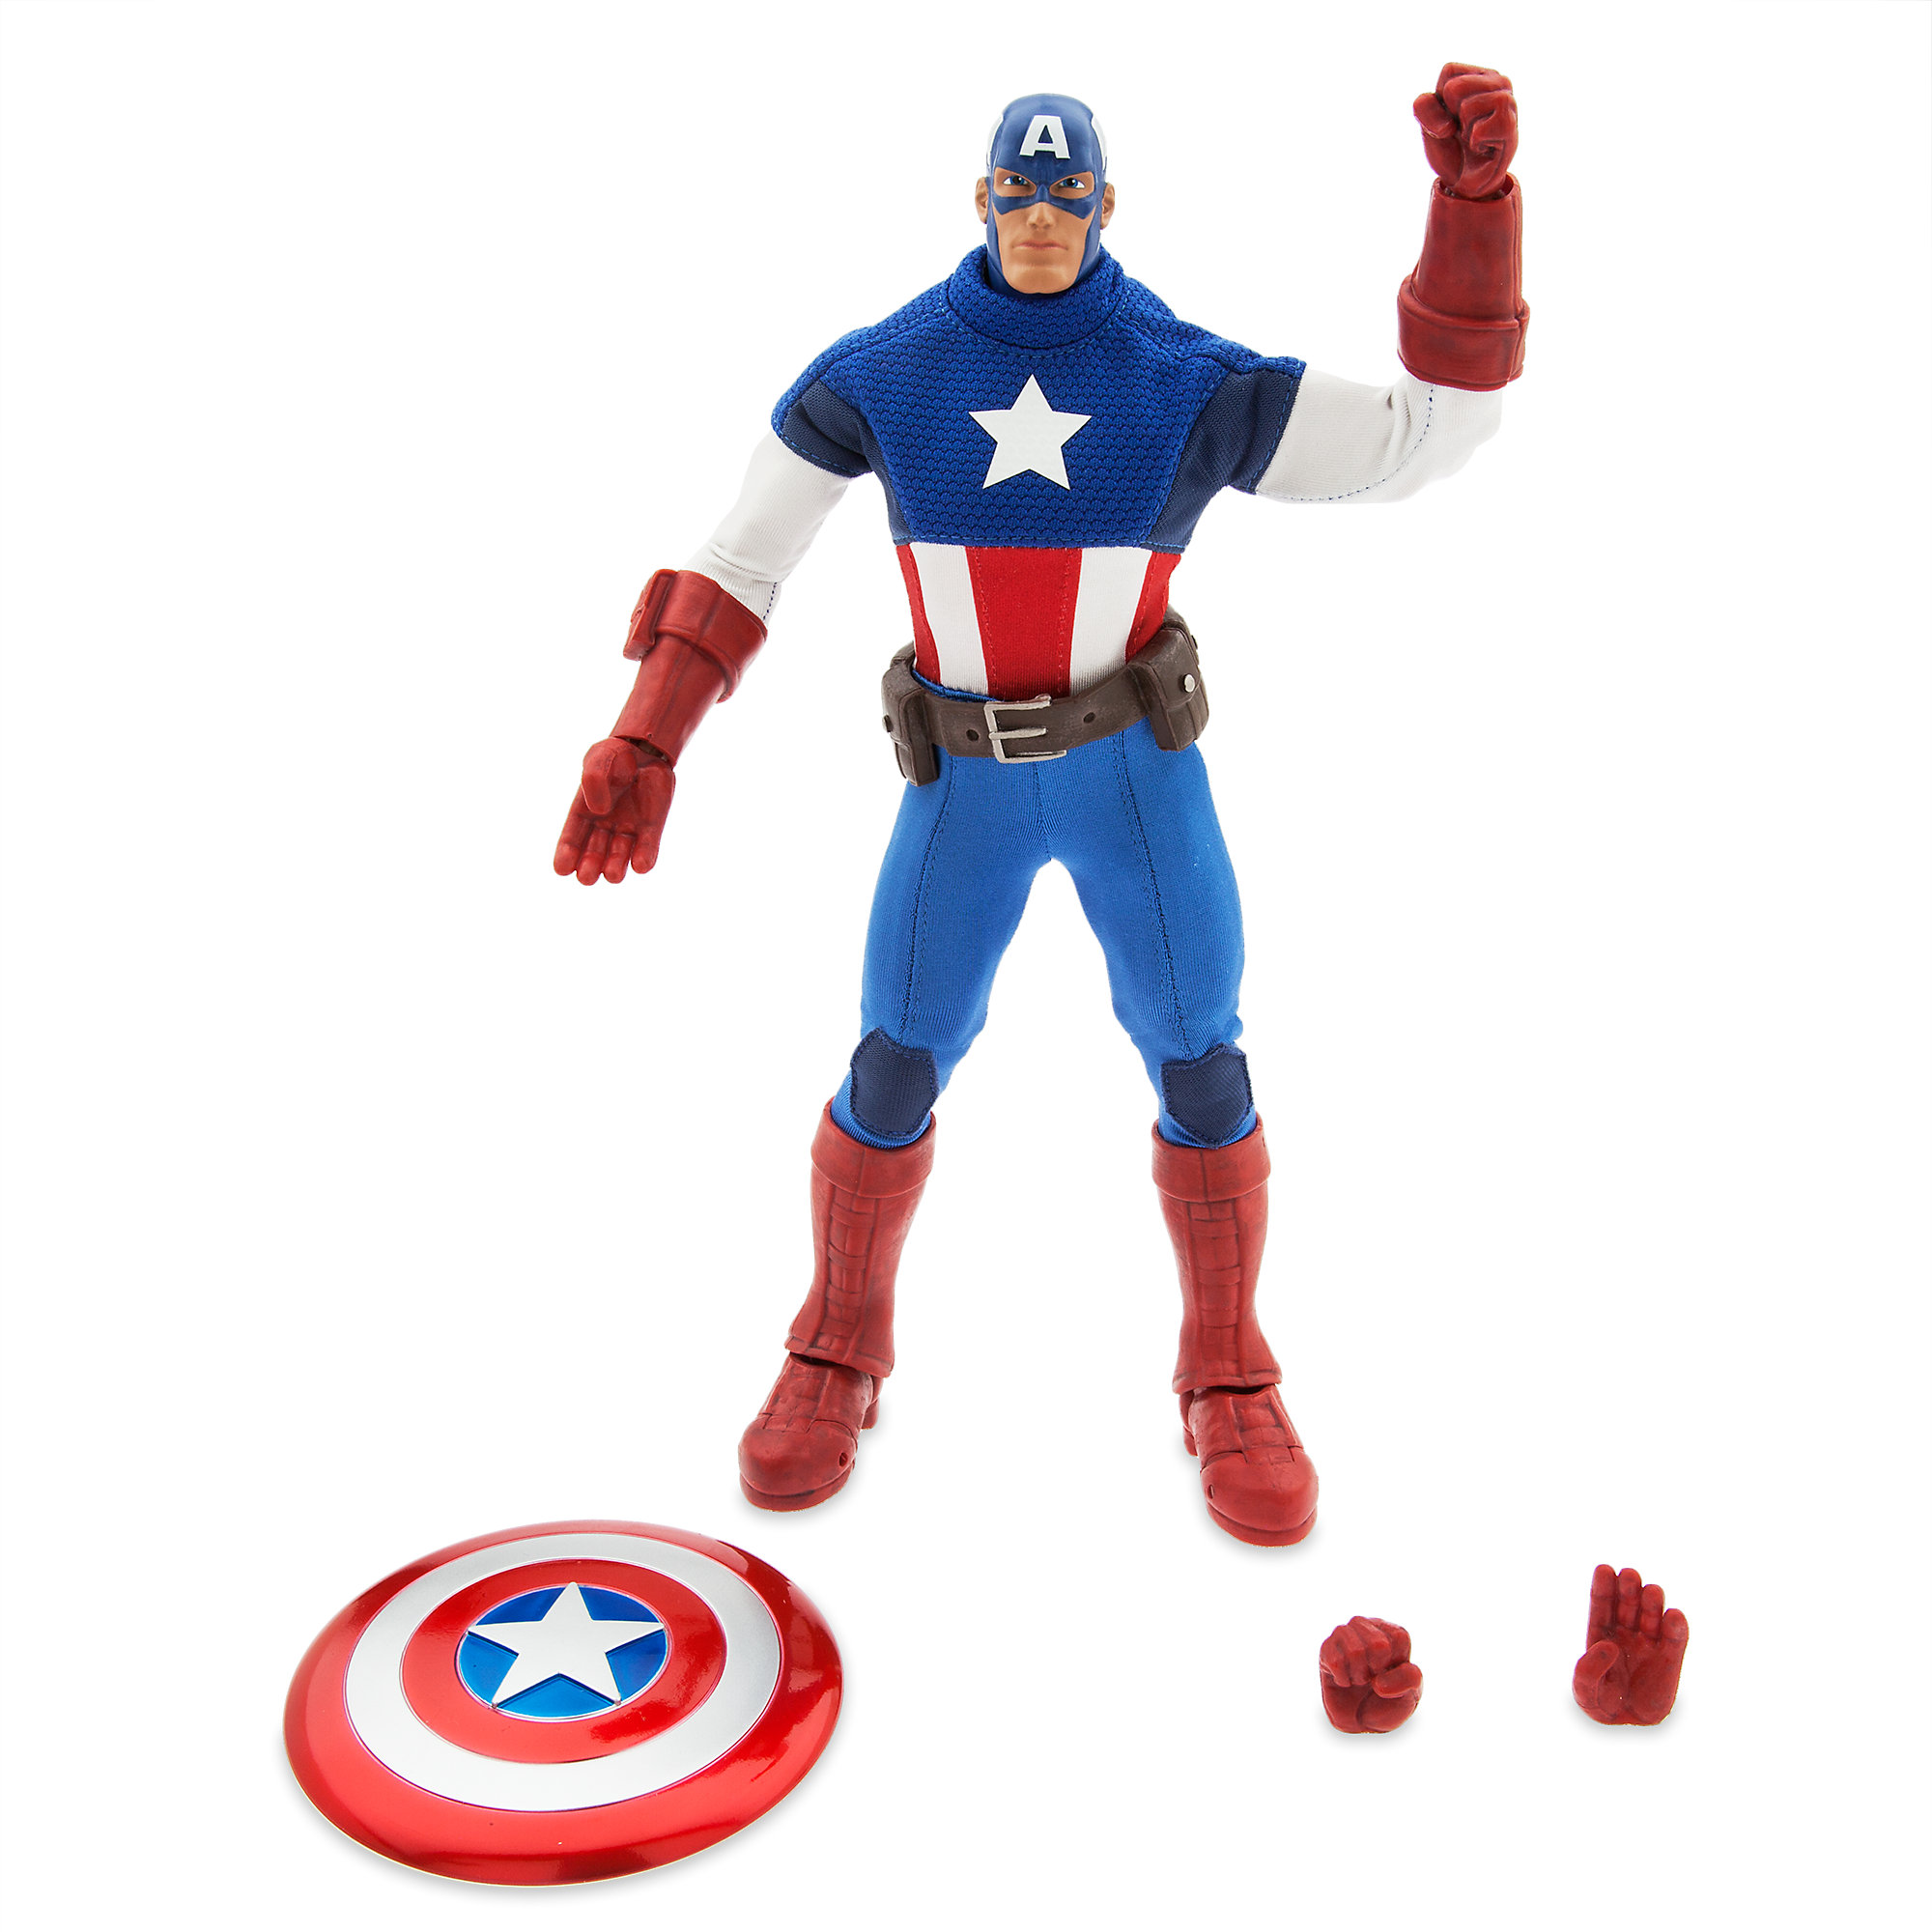 Disney Store Introduces New Marvel Ultimate Series Premium Action Figures –